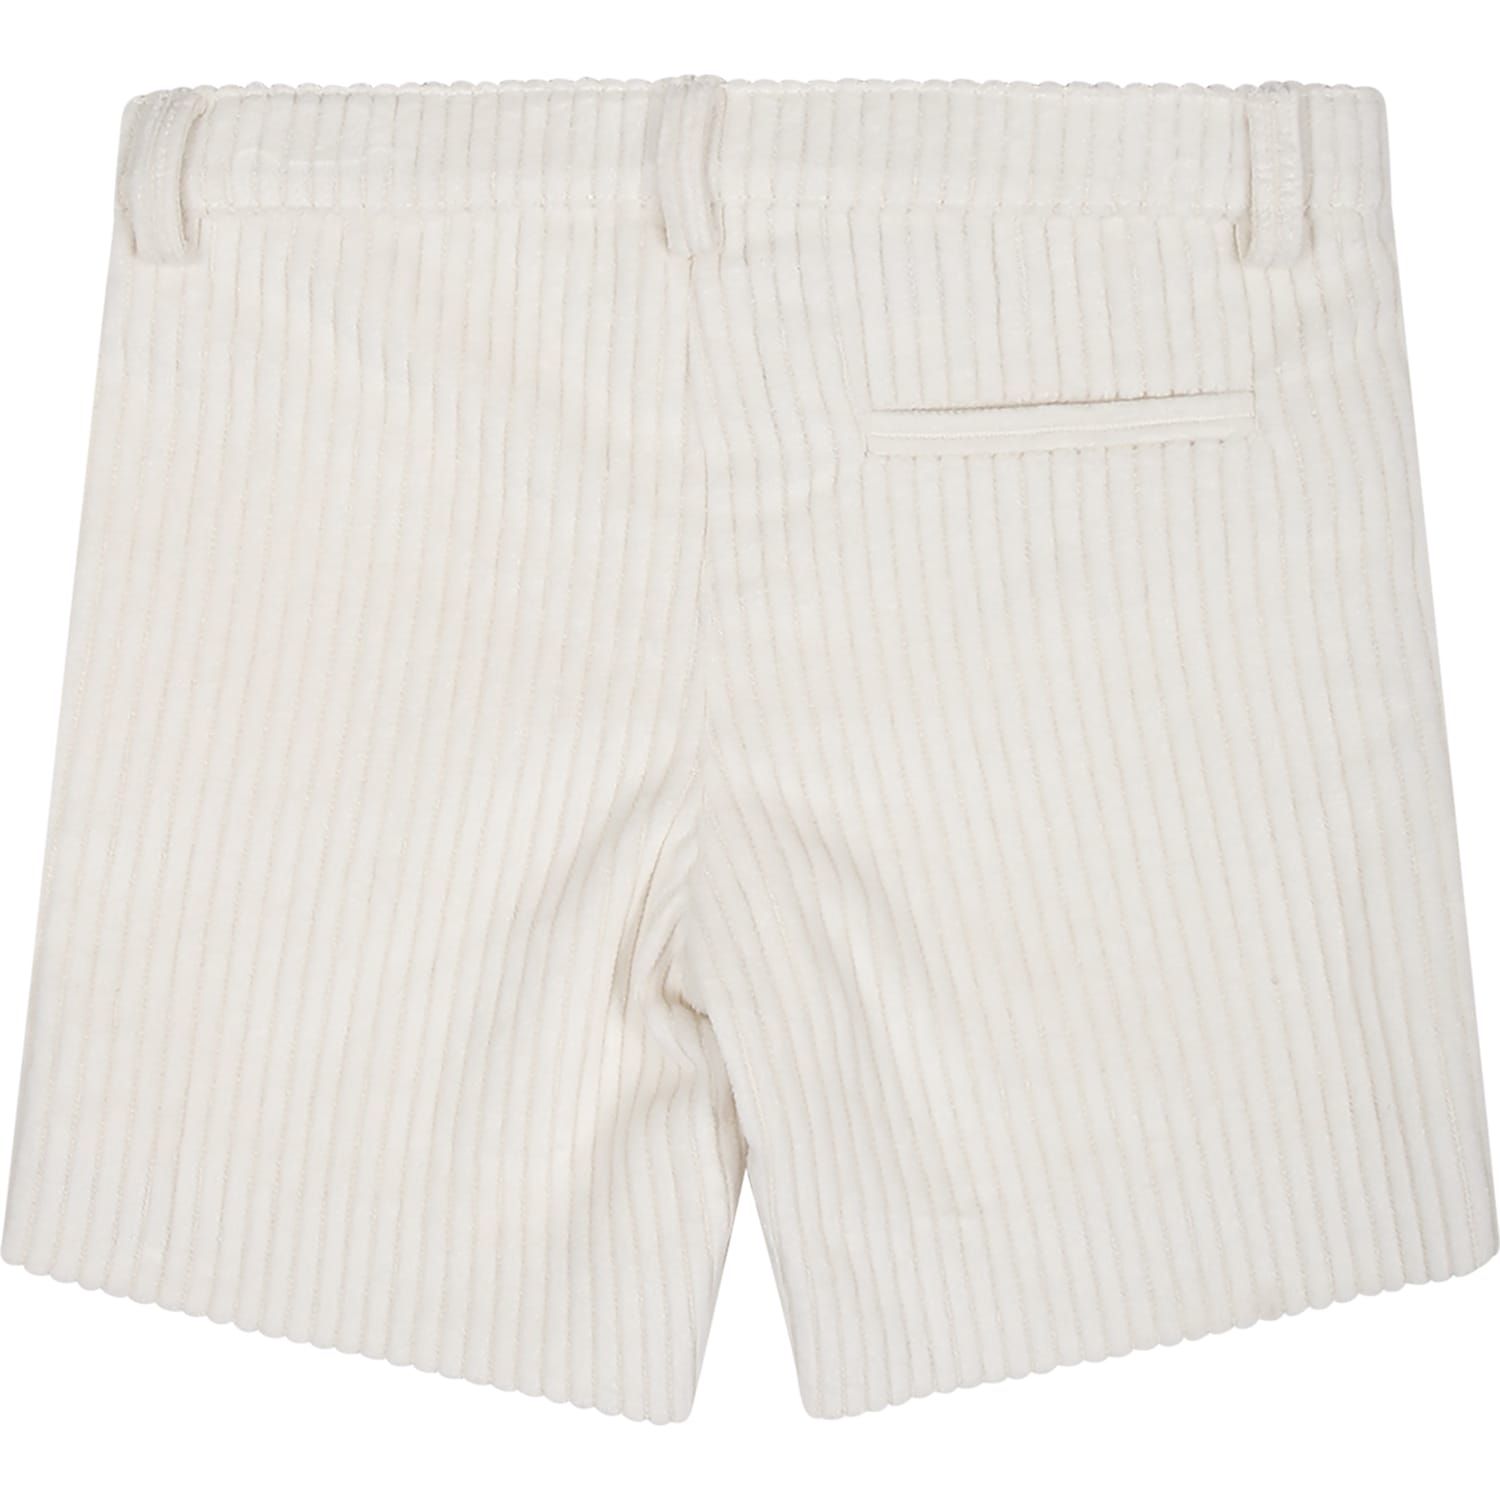 Shop Little Bear White Shorts For Baby Boy